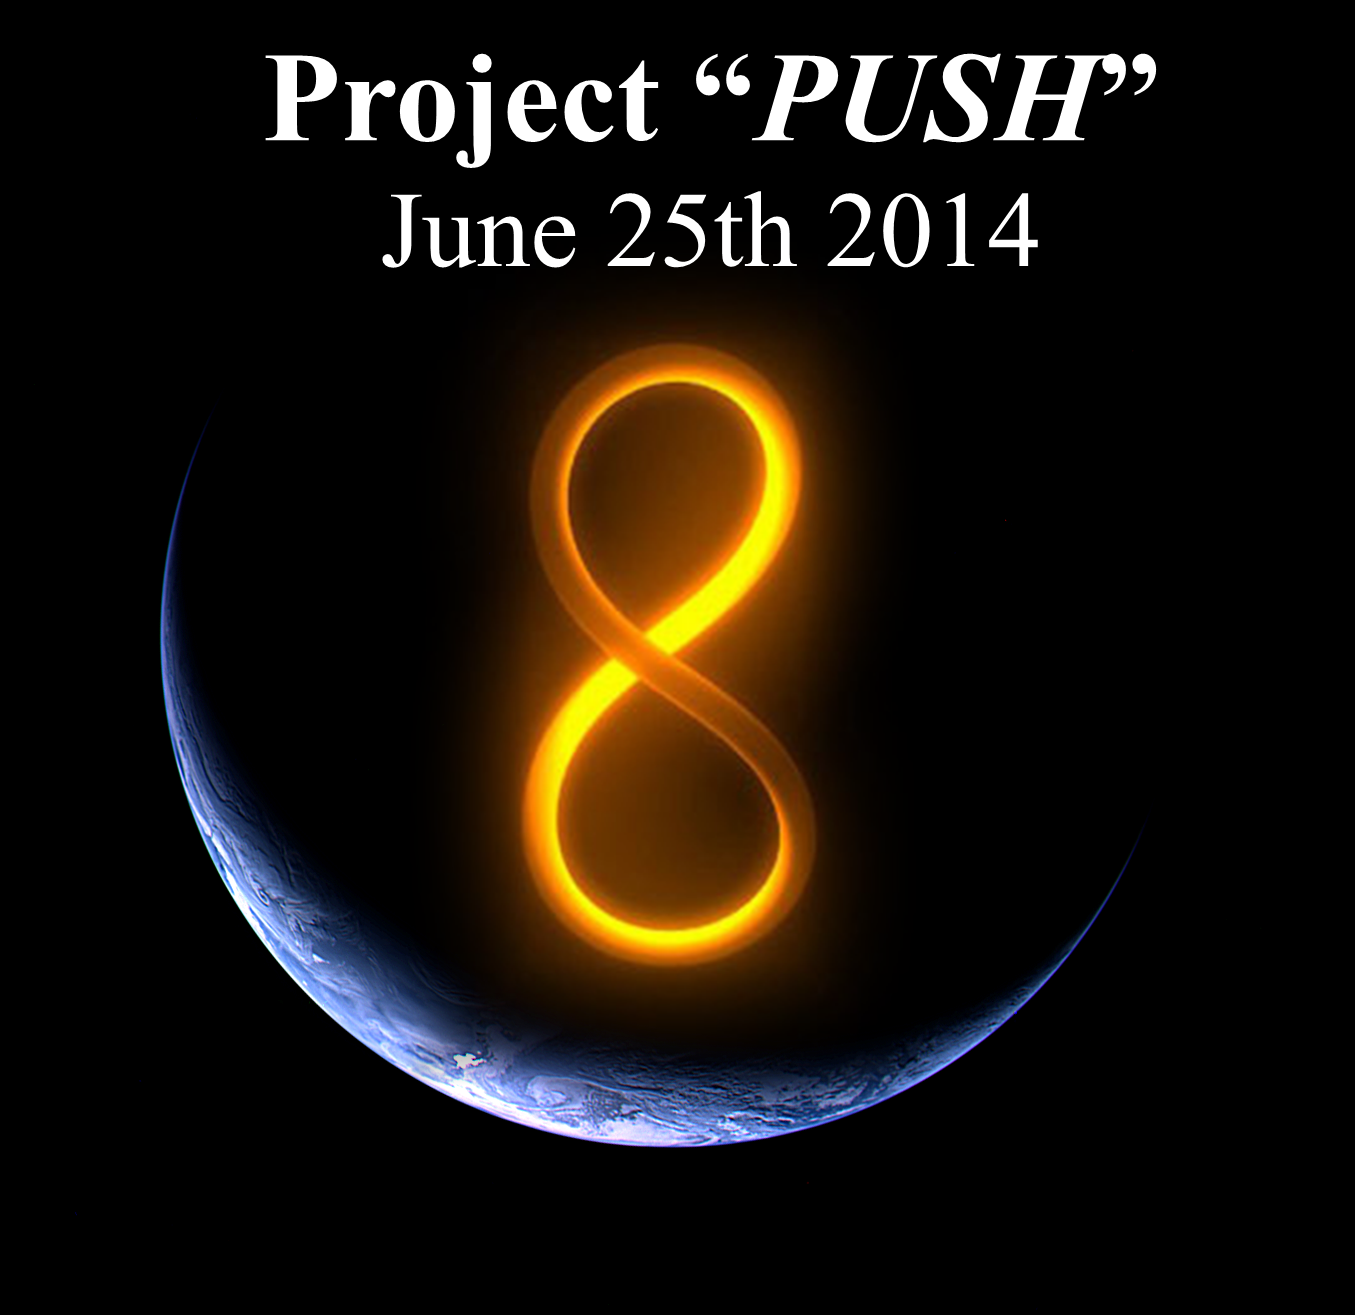 Project PUSH June 25th 2014